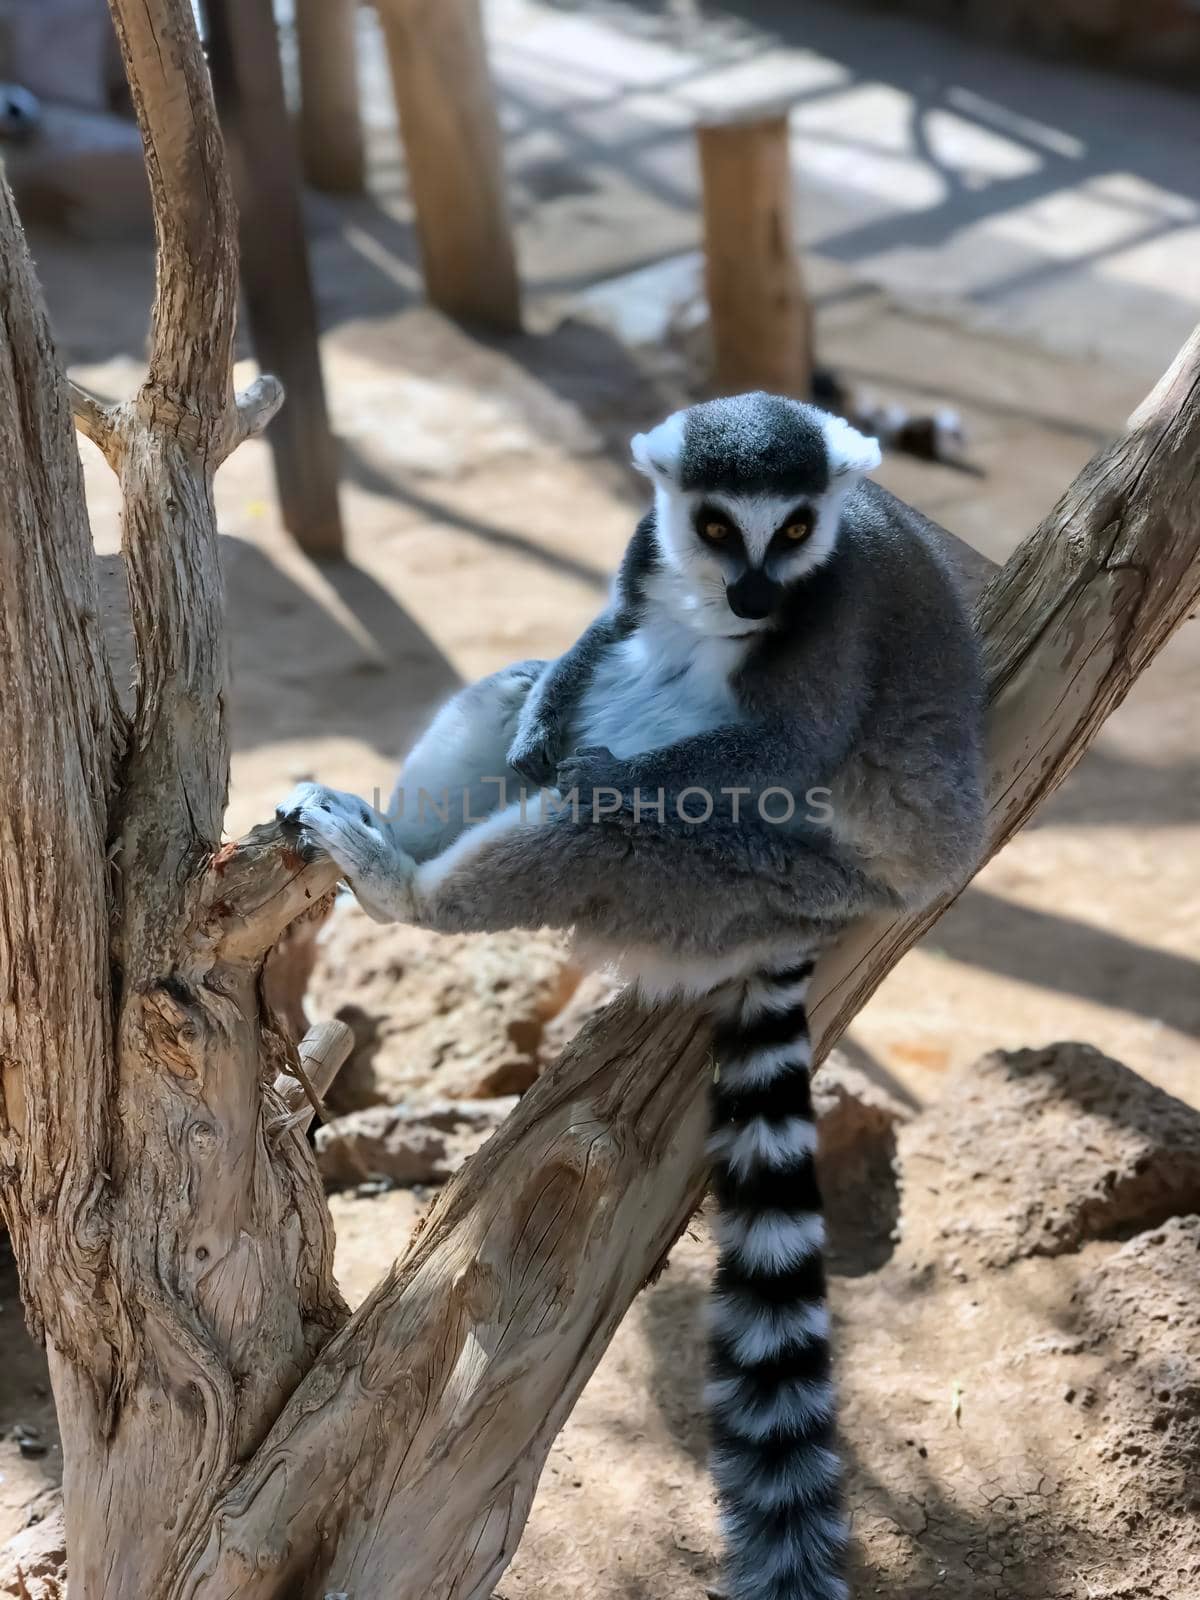 Monkey Lemur, Tenerife, Canary Islands, Spain by kaliaevaen